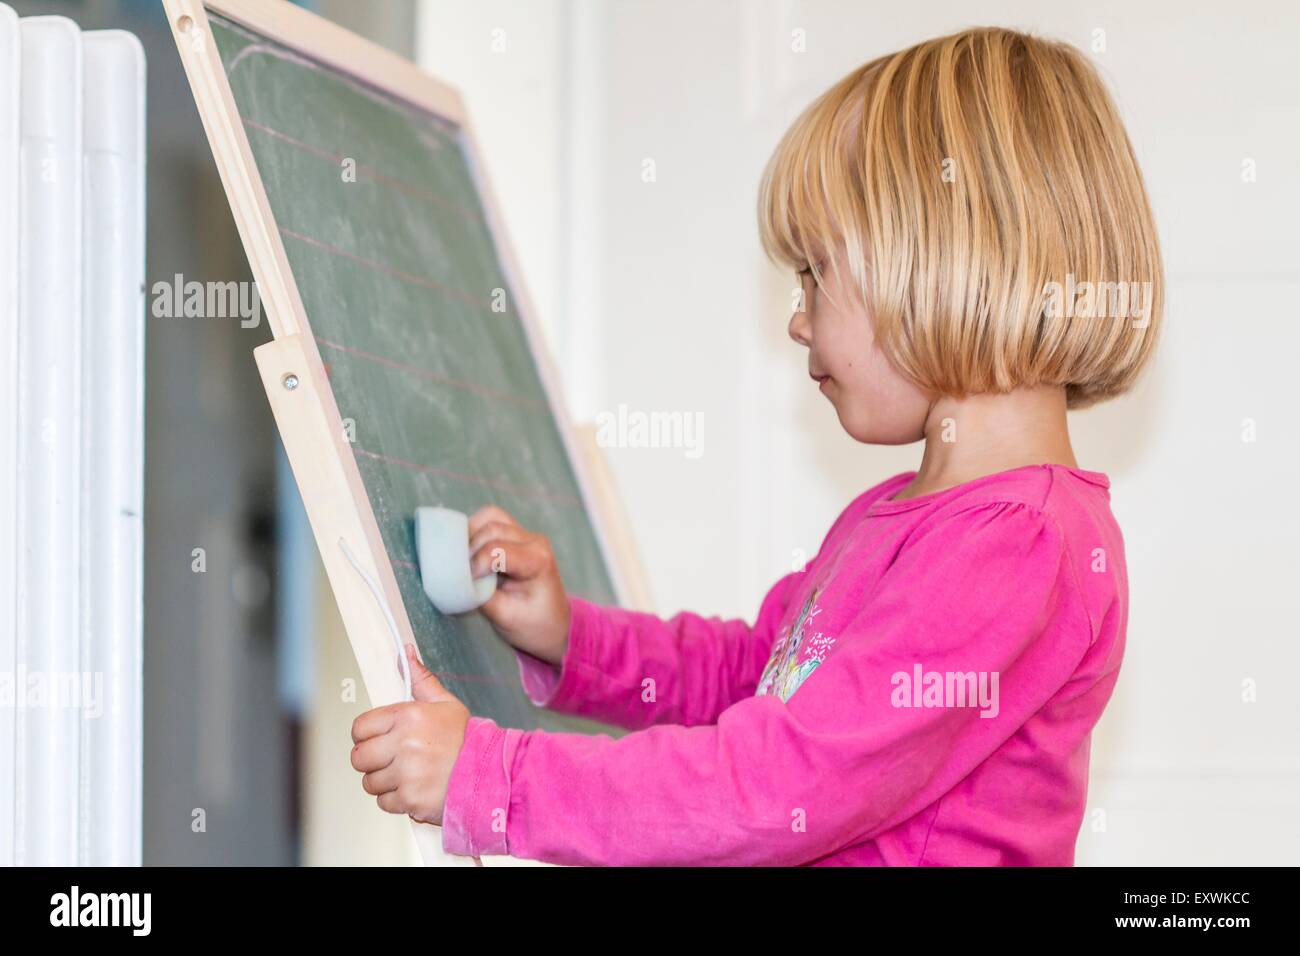 Girl playing school at blackboard Stock Photo